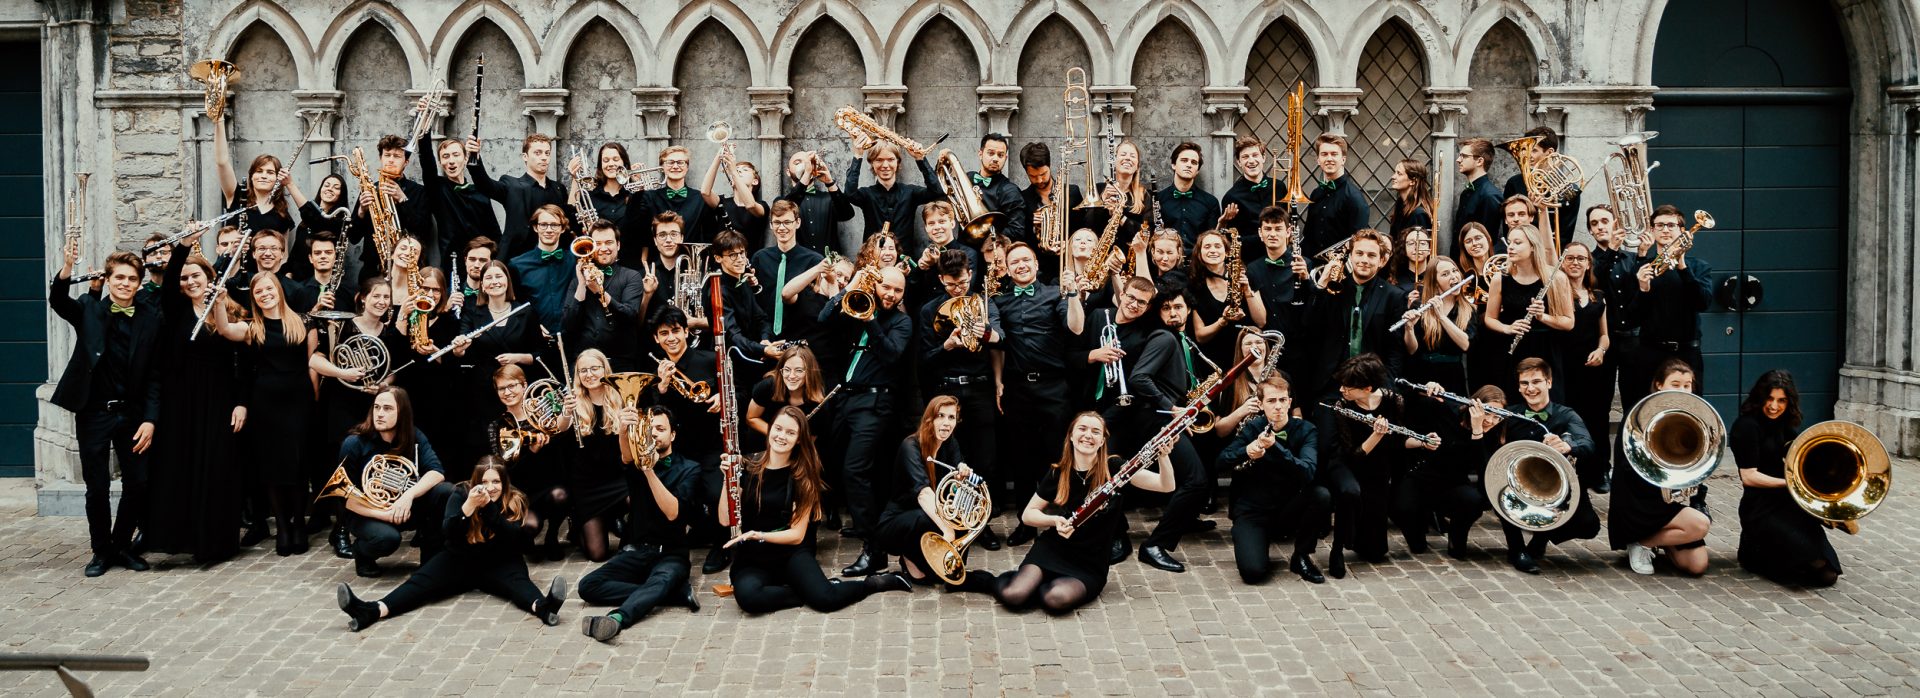 Gents Universitair Harmonie Orkest